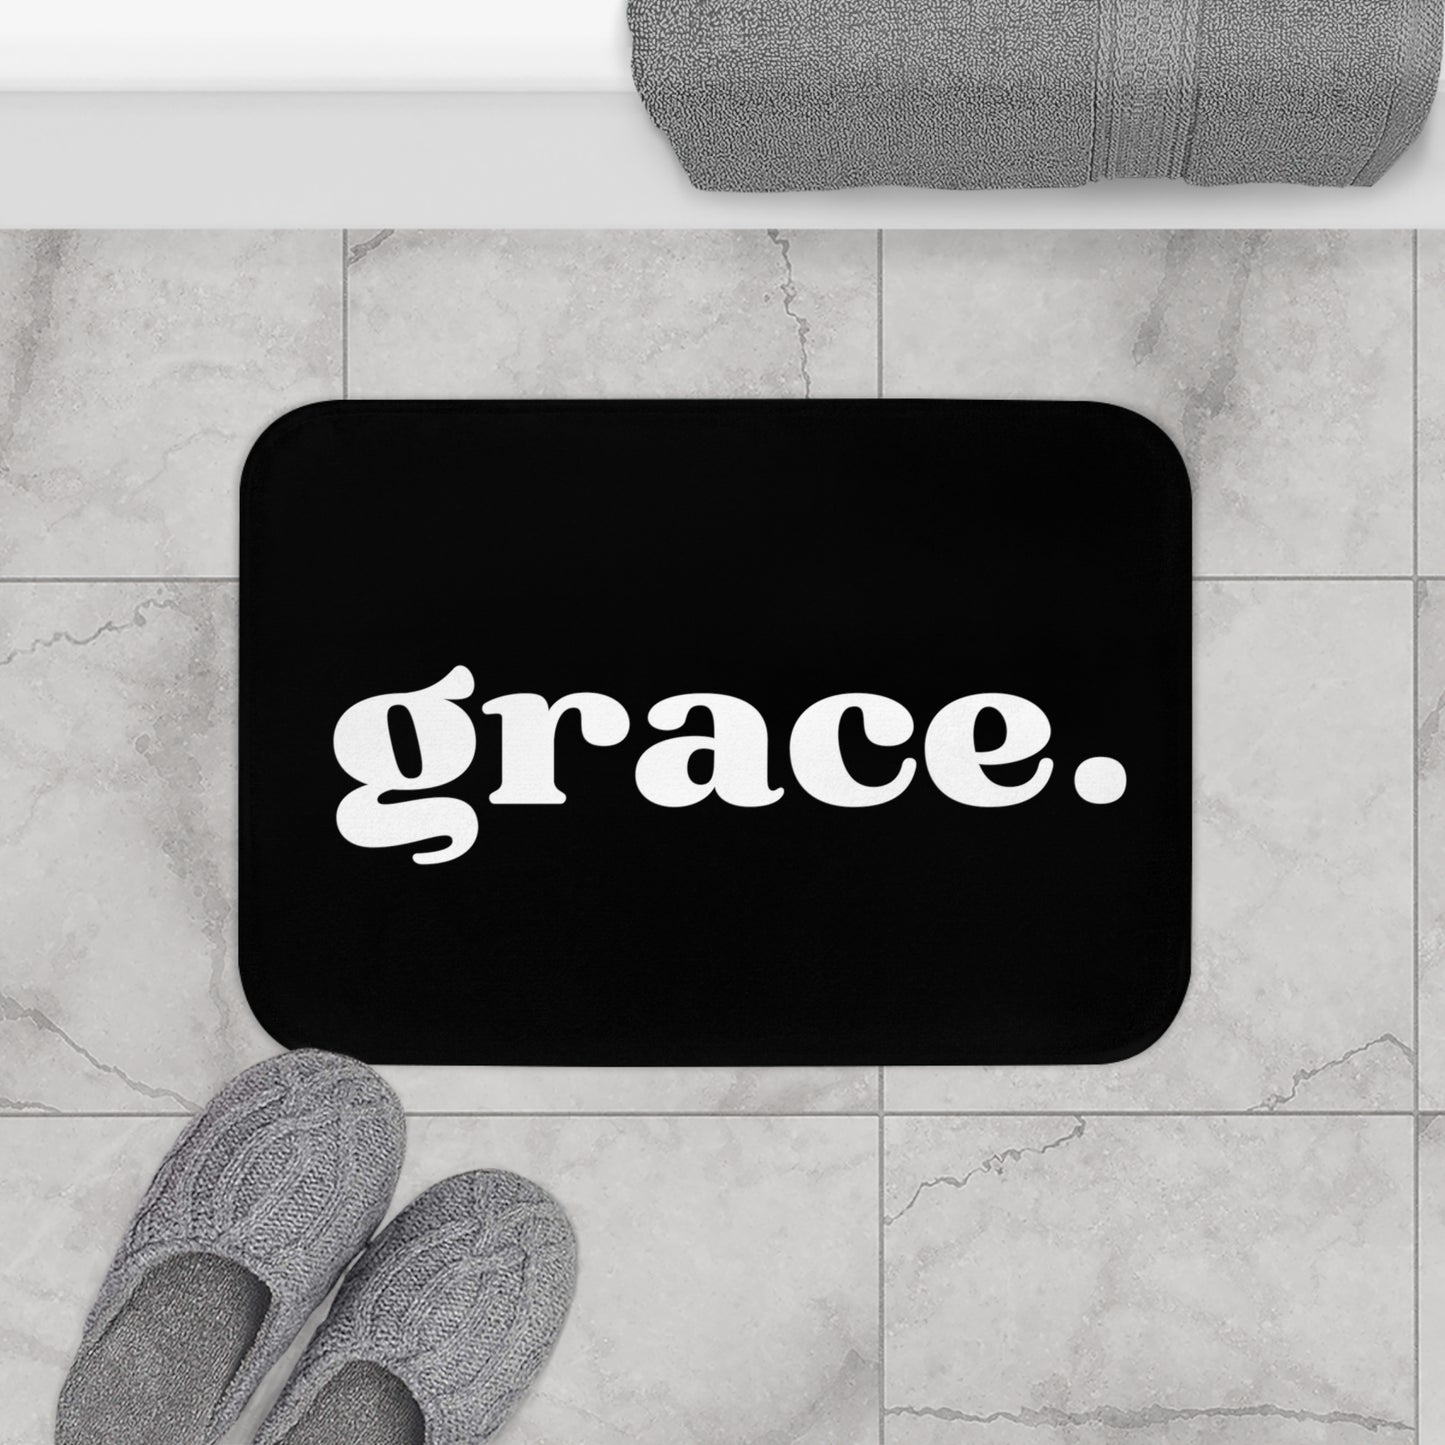 Grace Bath Mat - Black